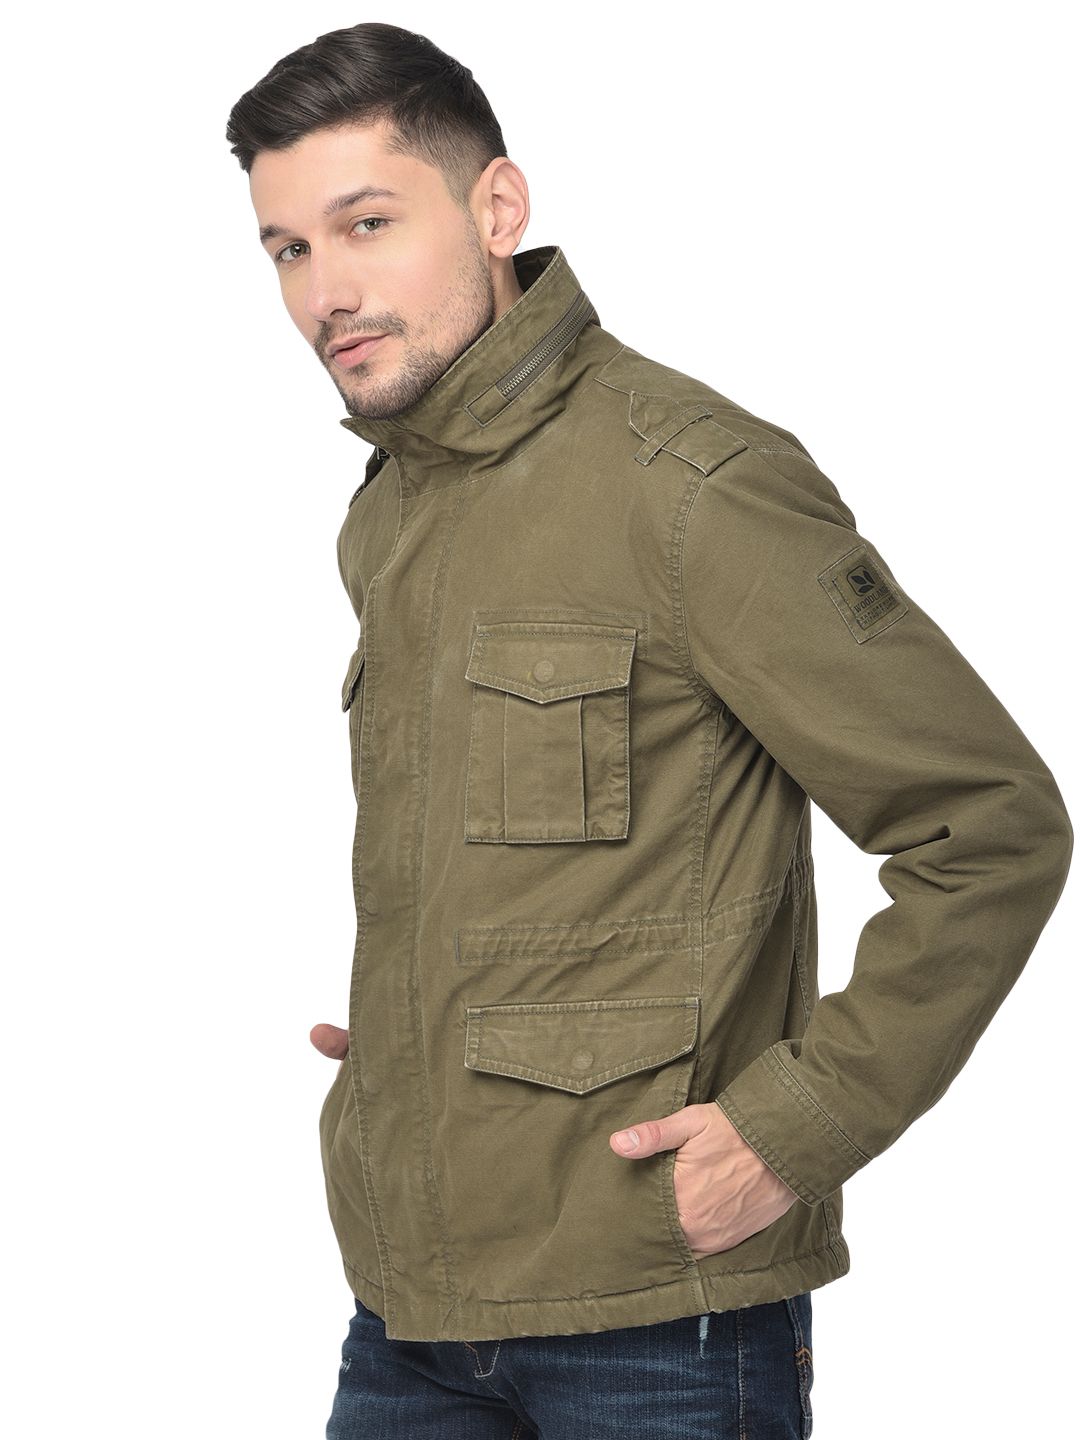 American Vintage Shirt Jacket Military Coats & Jackets for Men | Mercari-thanhphatduhoc.com.vn